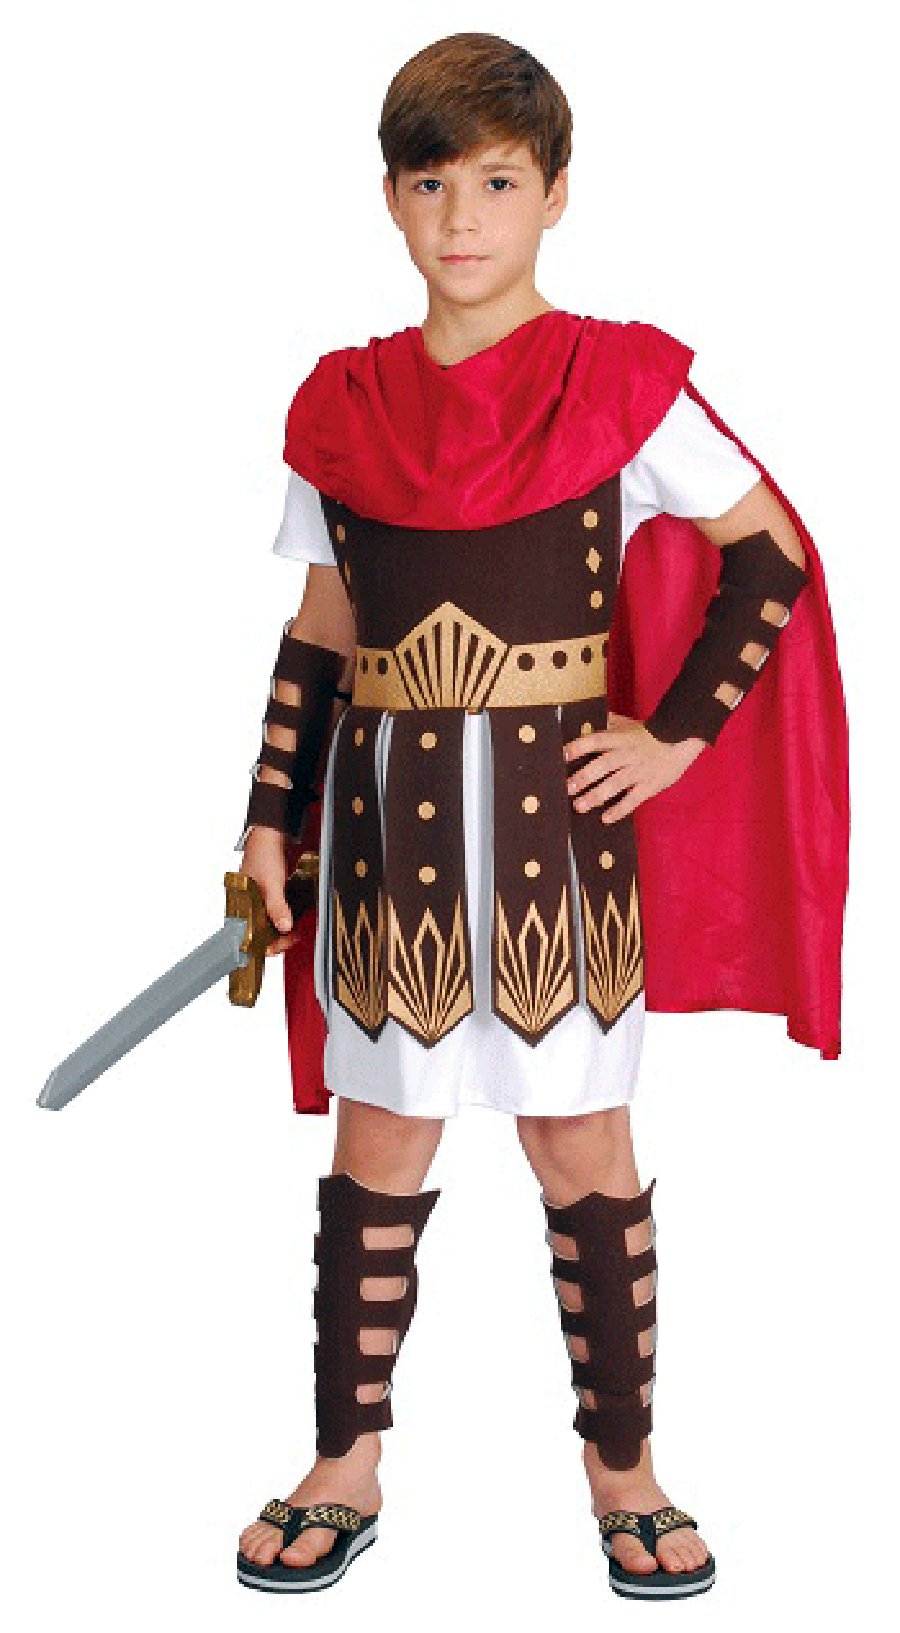 Costume Child Roman Gladiator 5-7